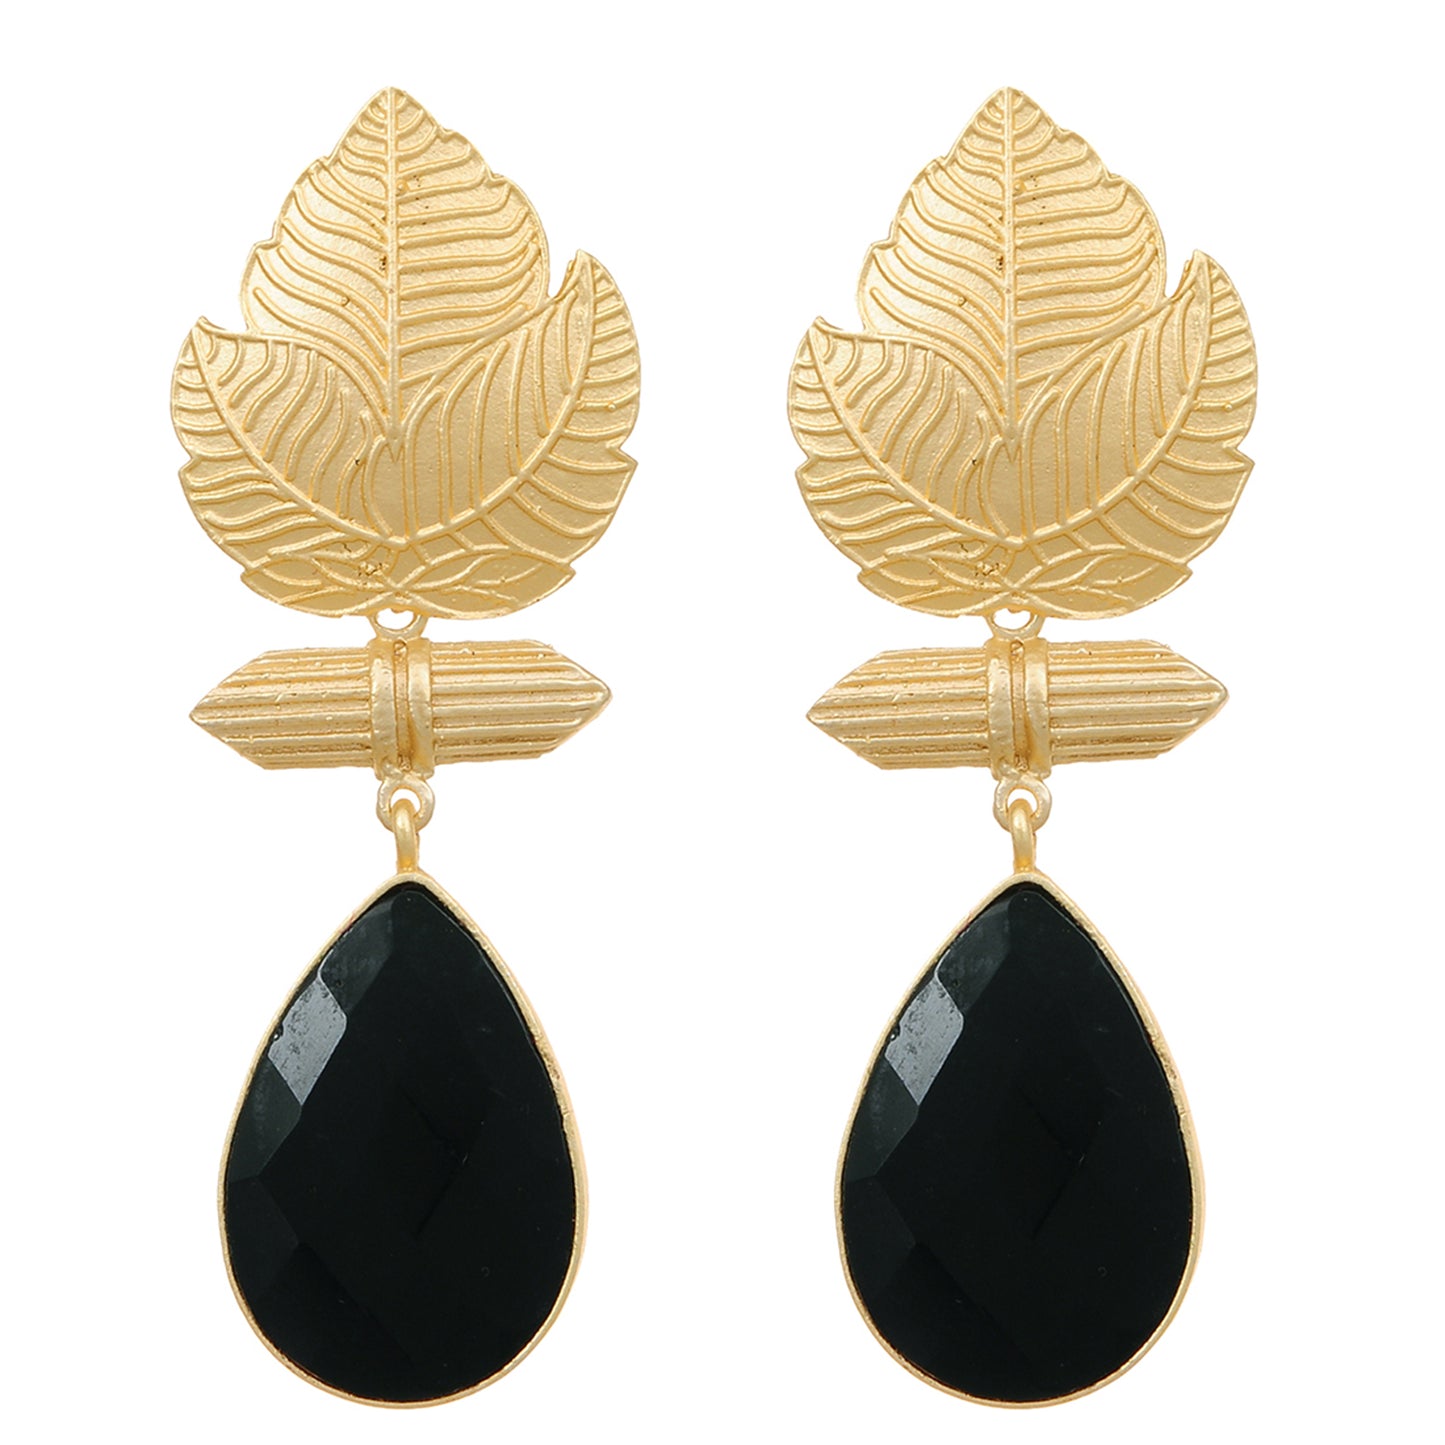 Gold Plated Leaf Fashion Designer Earrings Brass Jhumki for Girls and Women (Black)